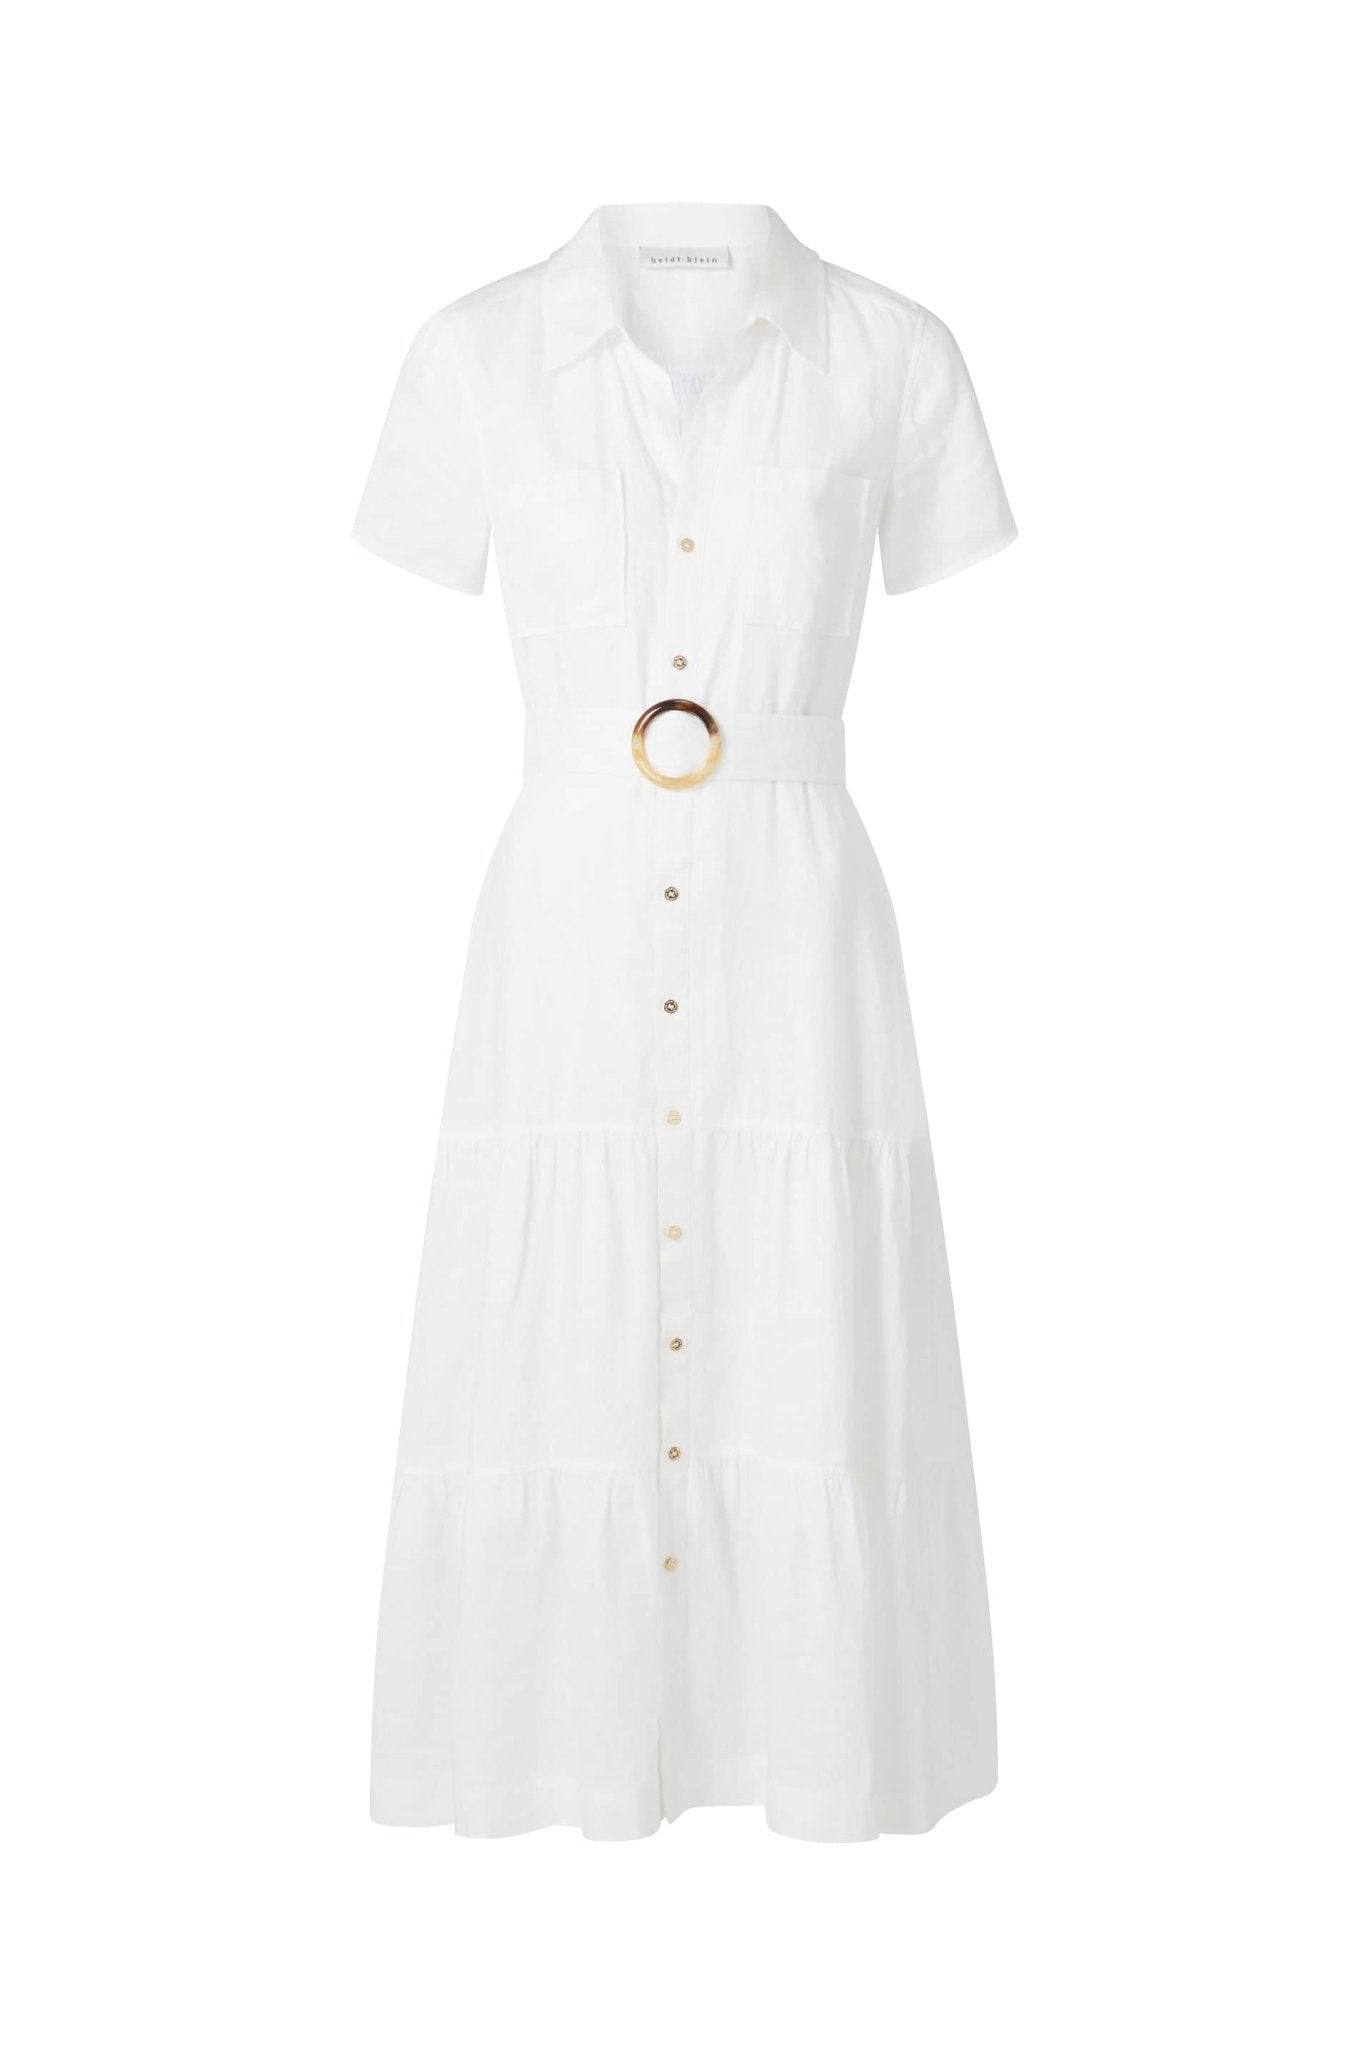 Mitsio Island Short Sleeve Shirt Dress - Heidi Klein - UK Store